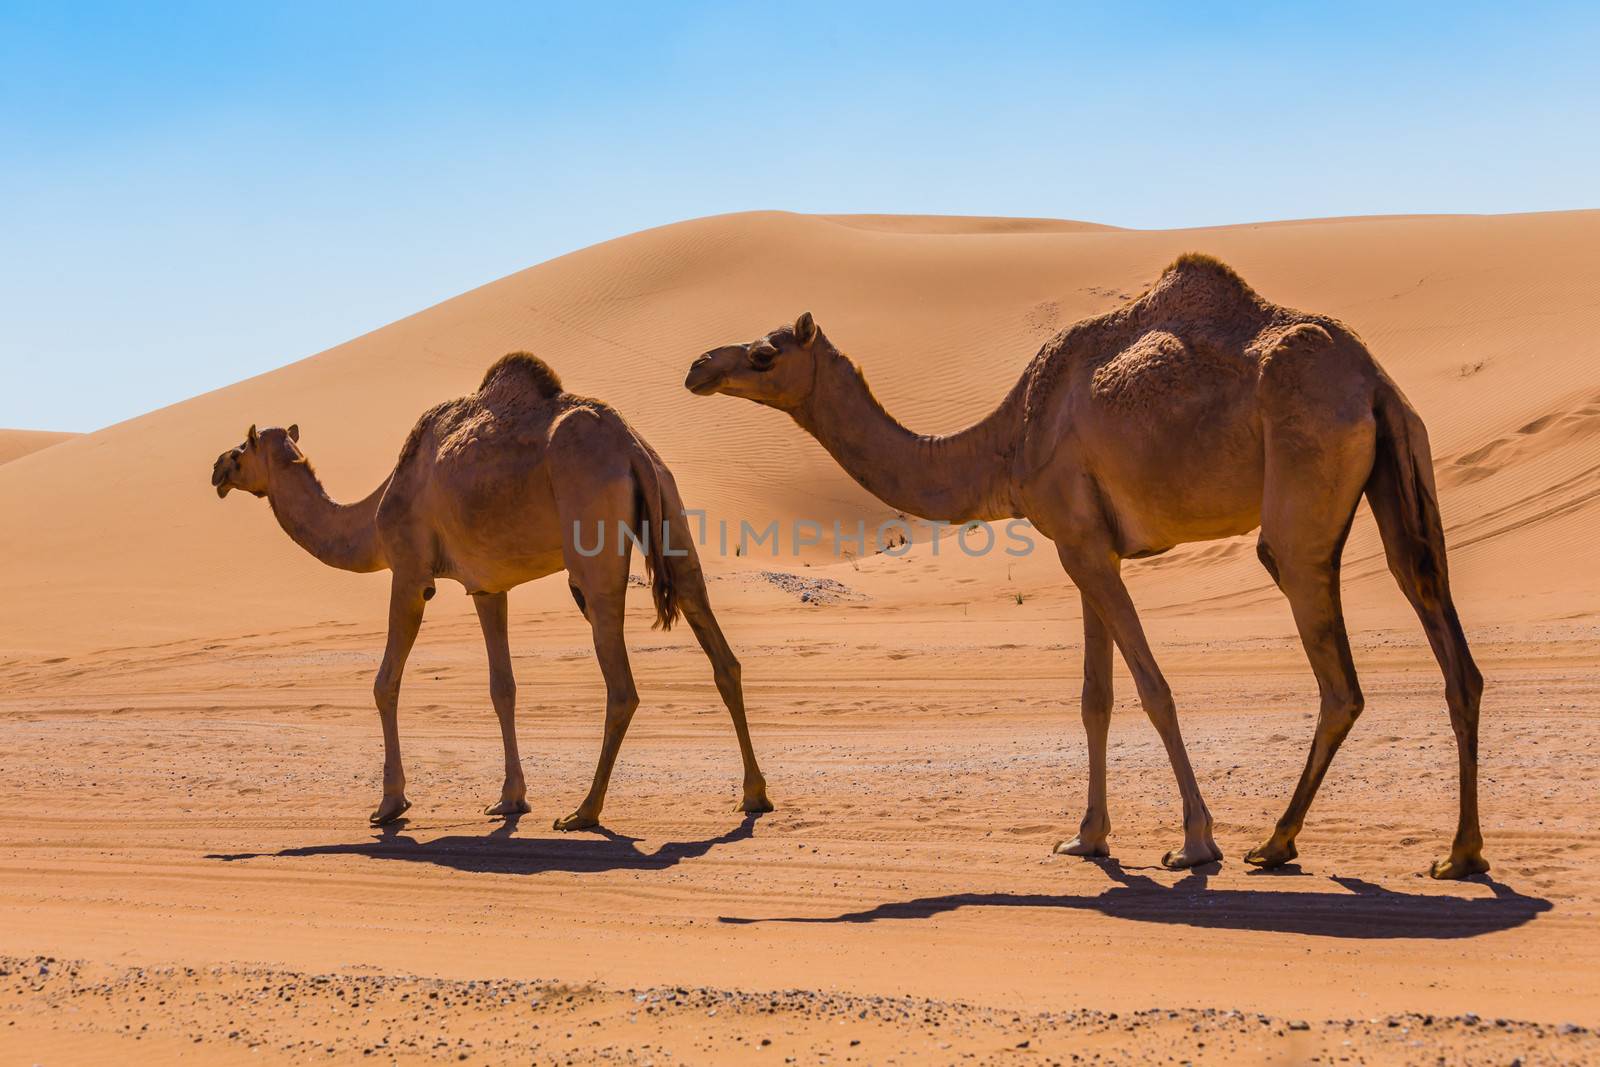 Desert landscape with camel by oleg_zhukov